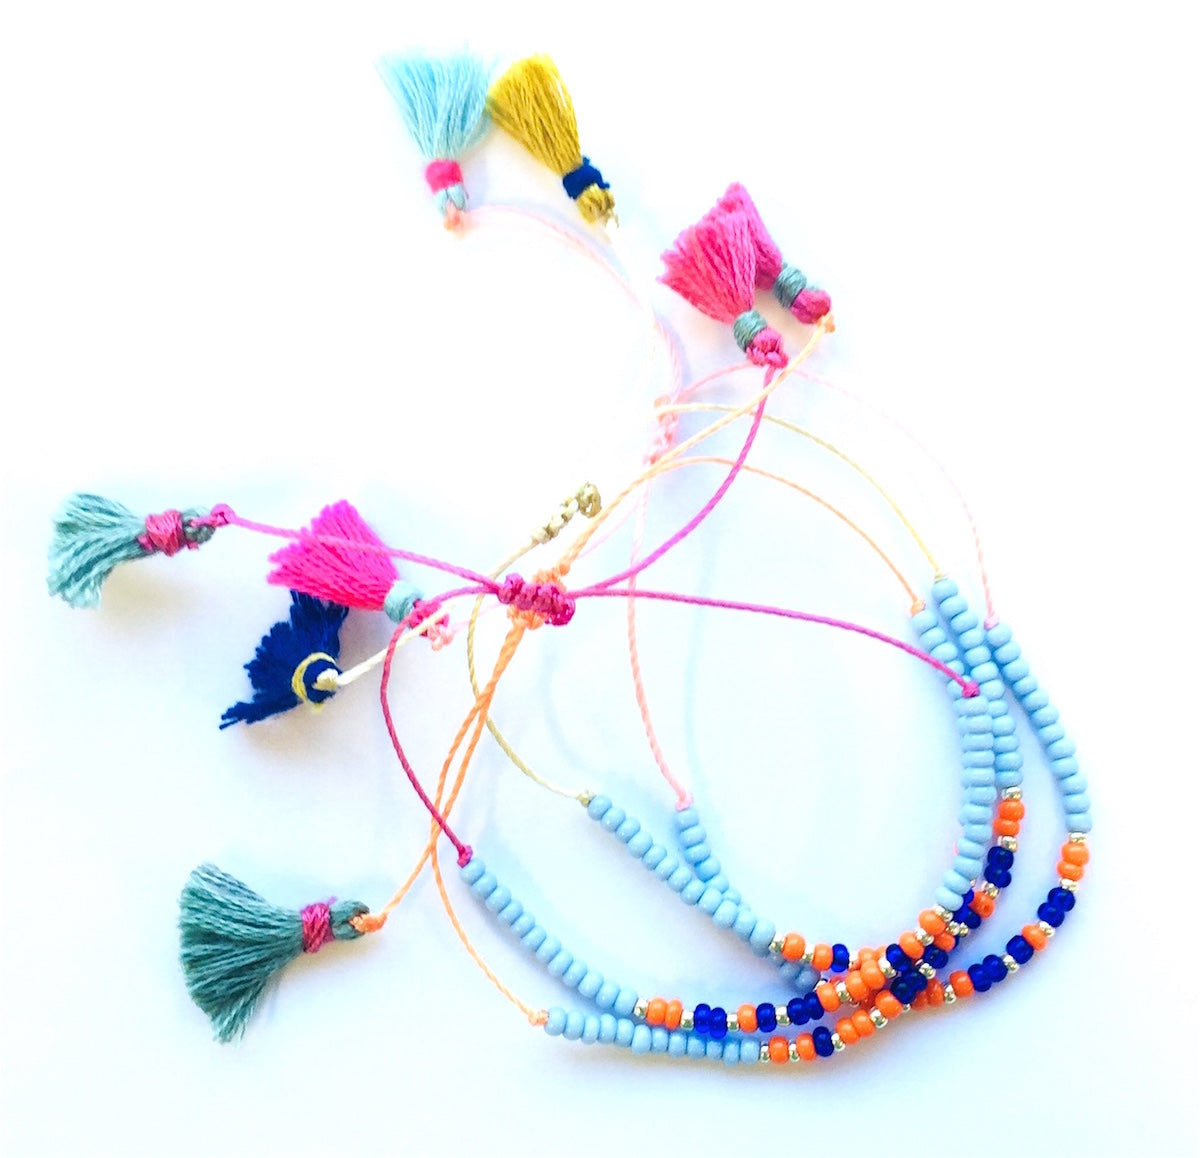 Tassel-Armband Imagine für Teens, handmade, 1 Stk